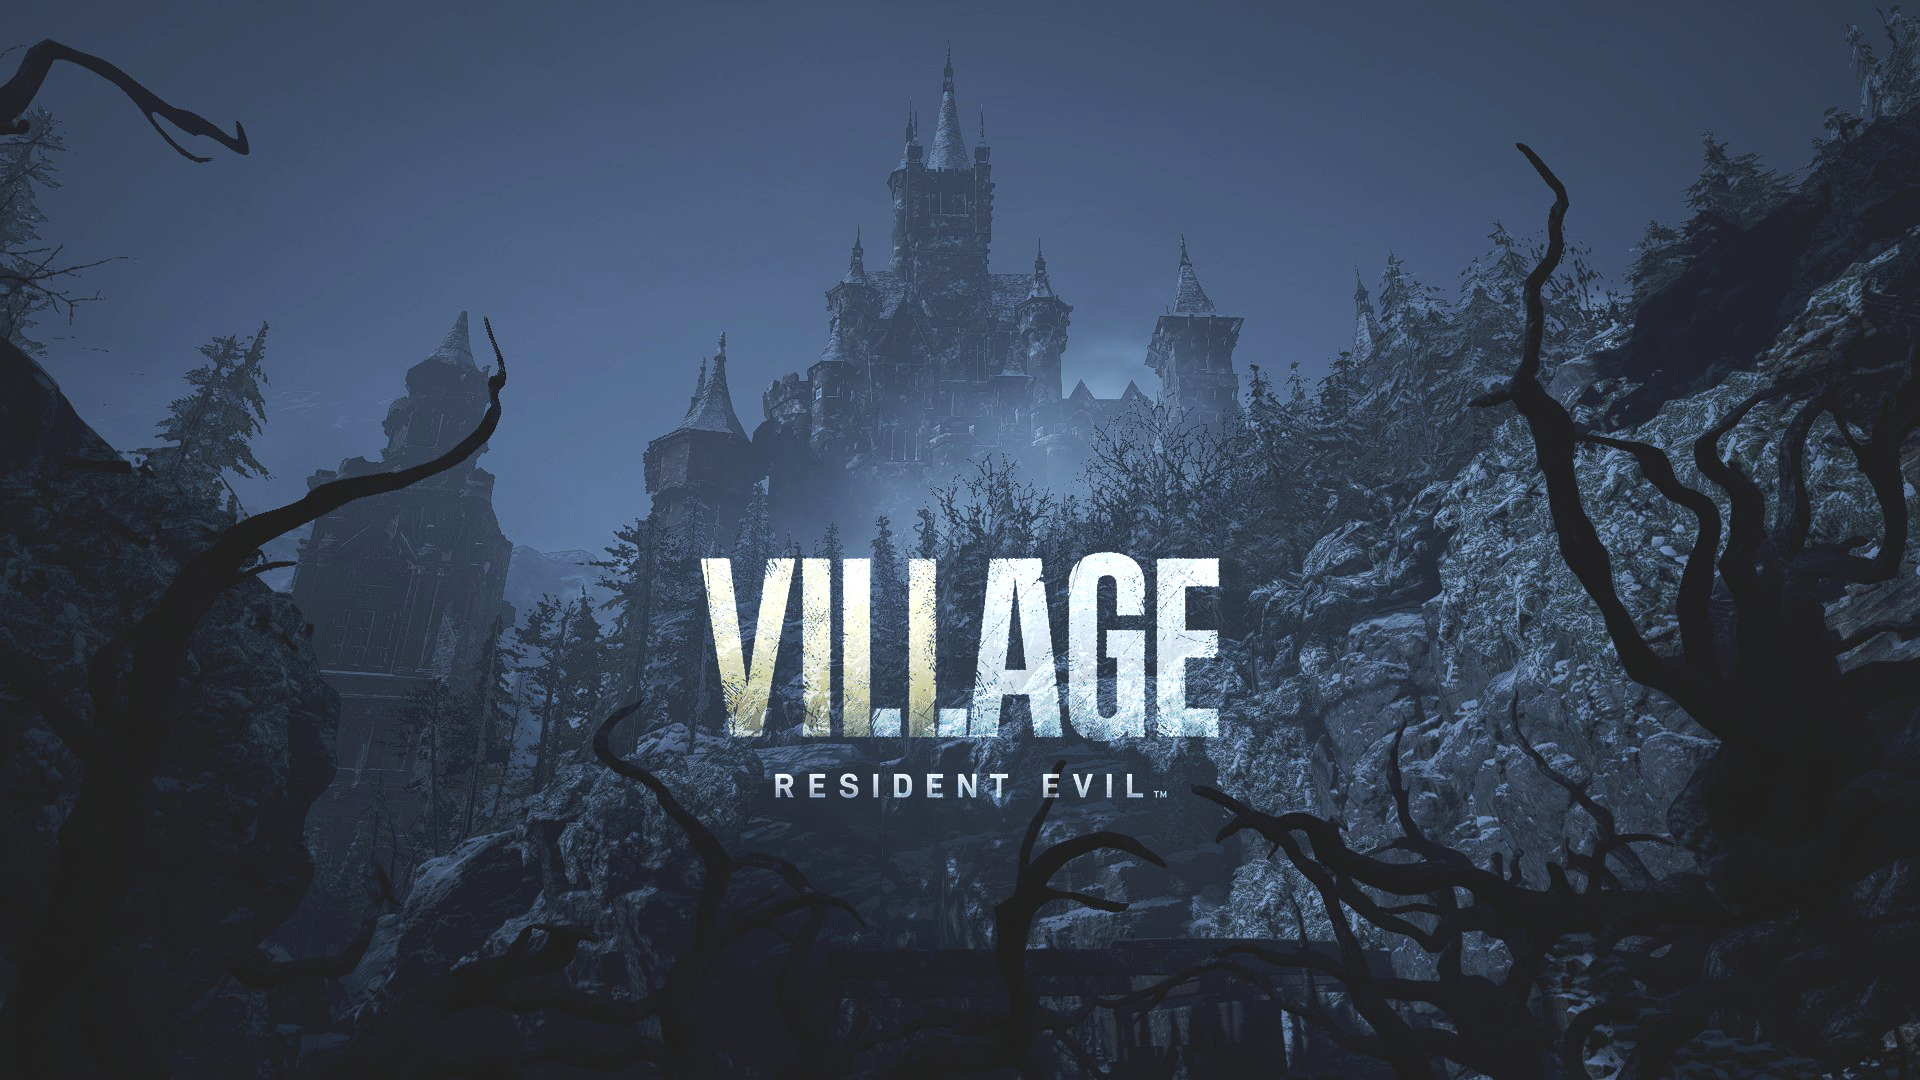 Resident Evil Village PC review